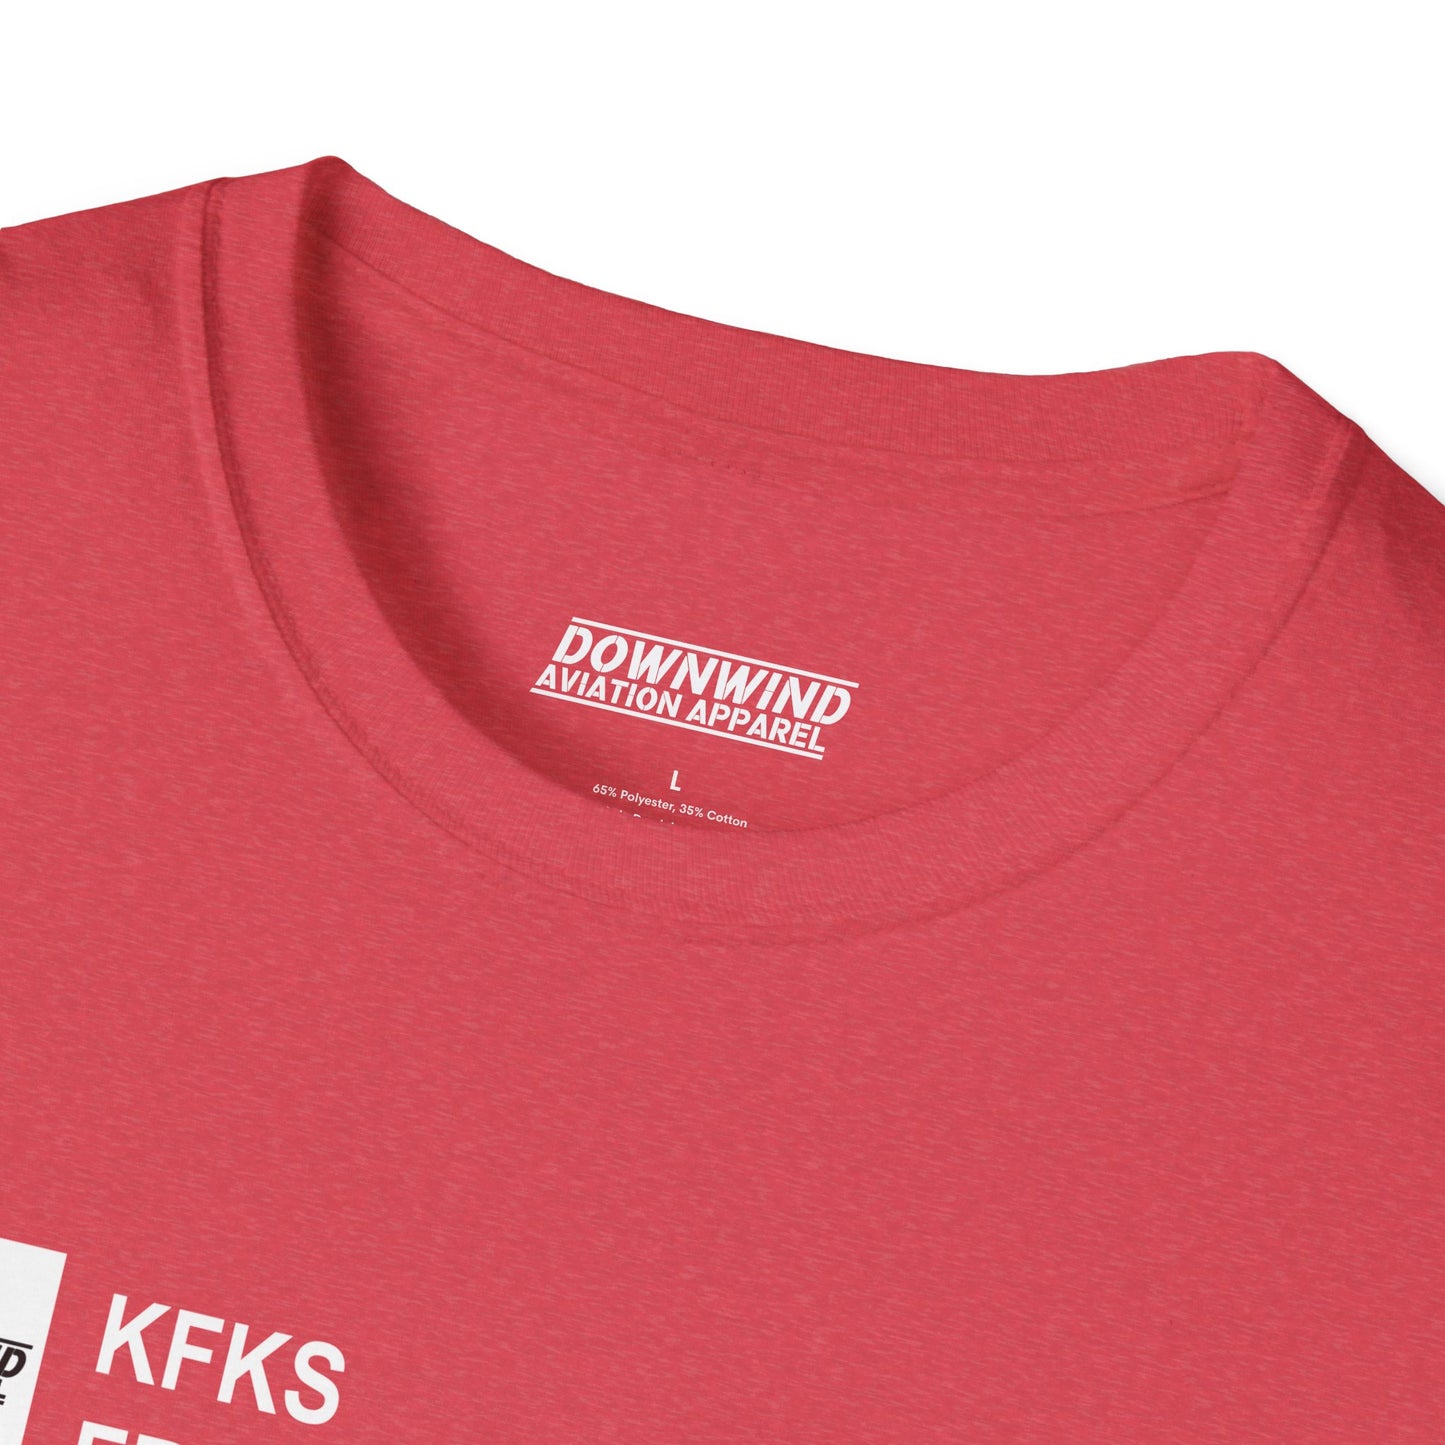 KFKS / Frankfort Dow Meml. T-Shirt